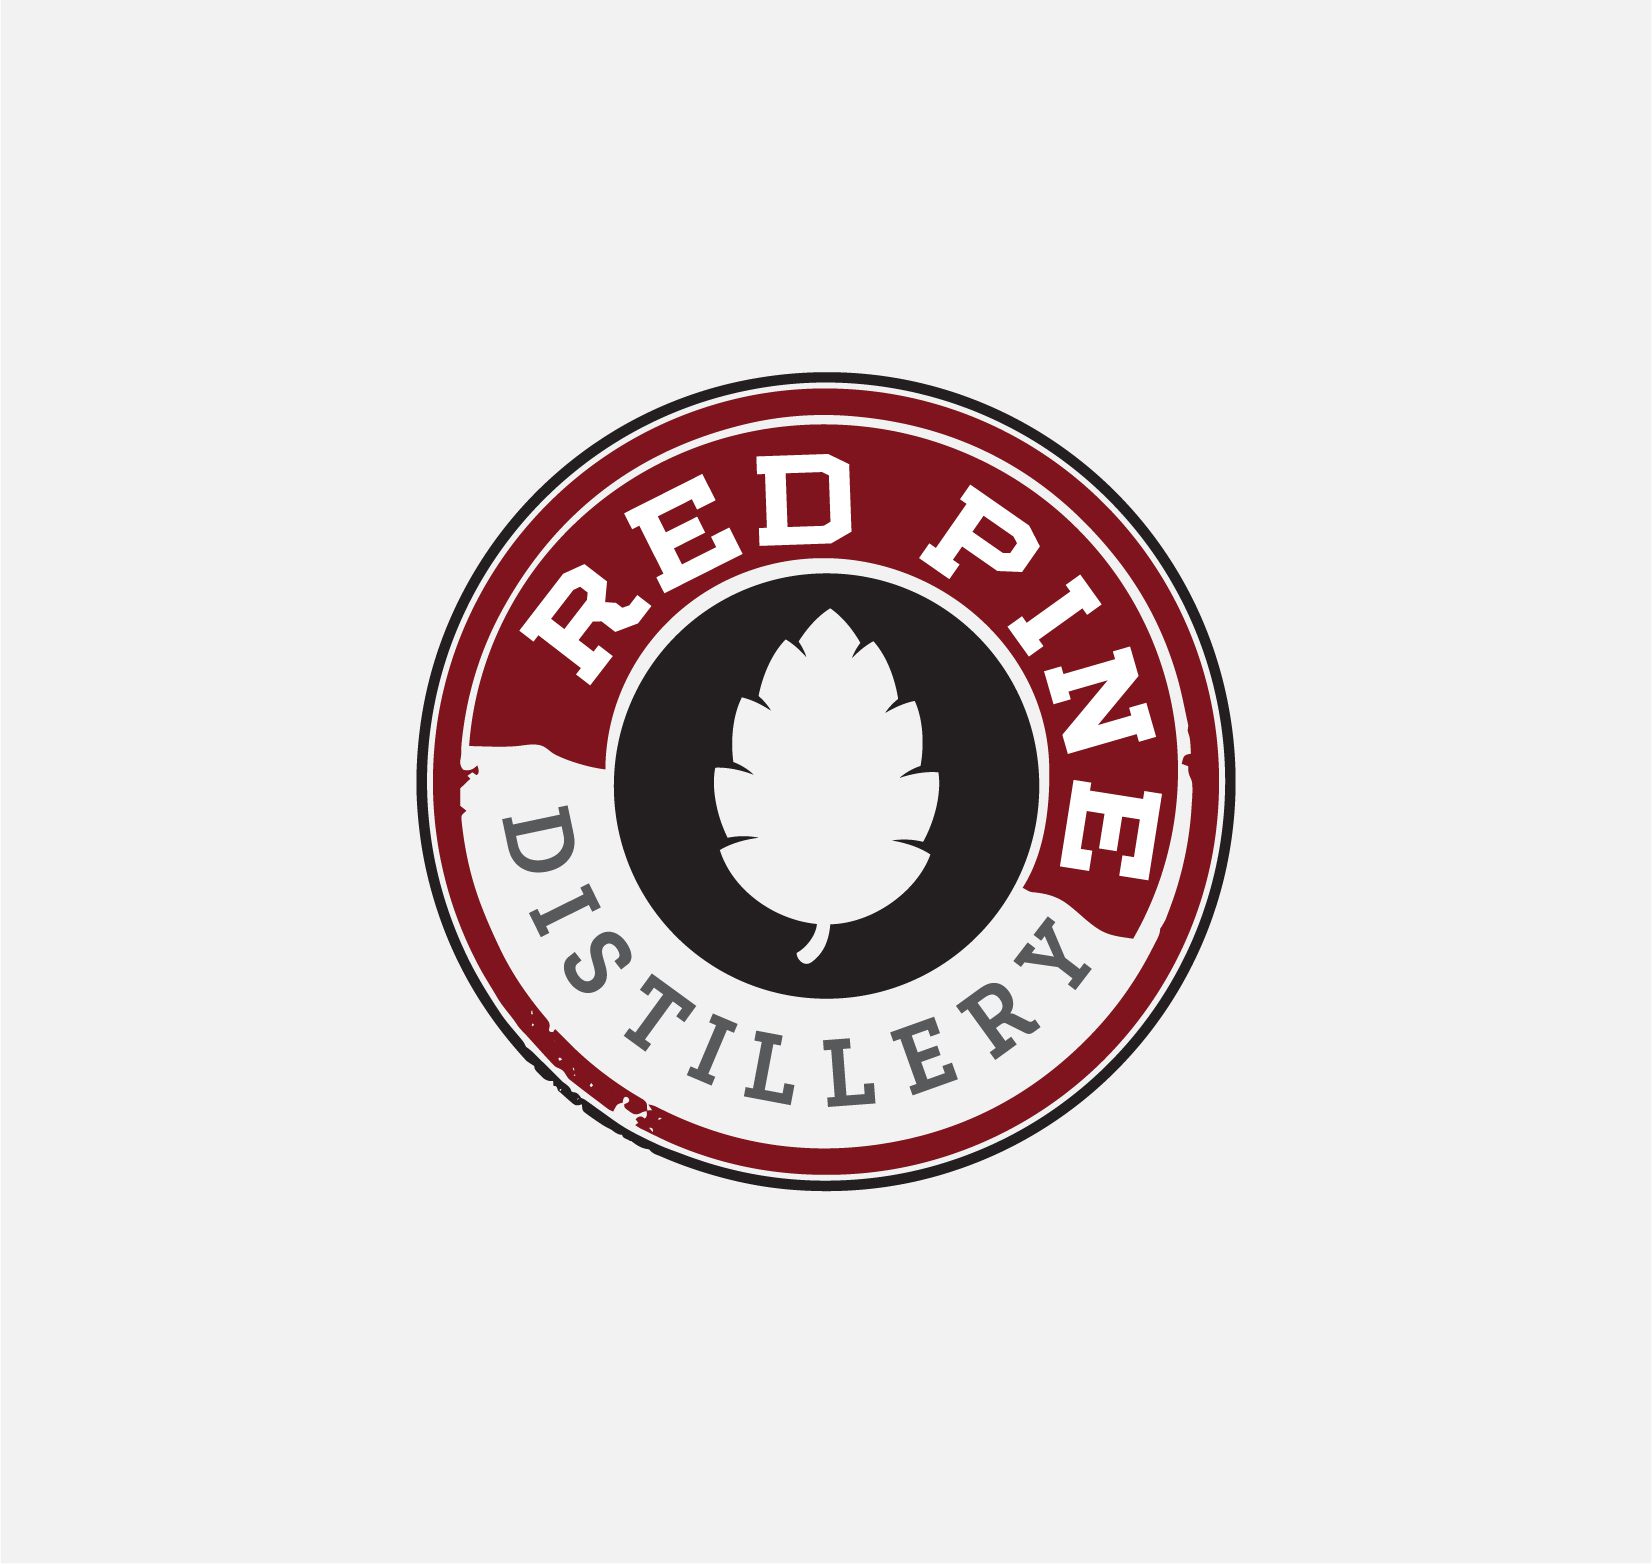 Red Pine Distillery logo